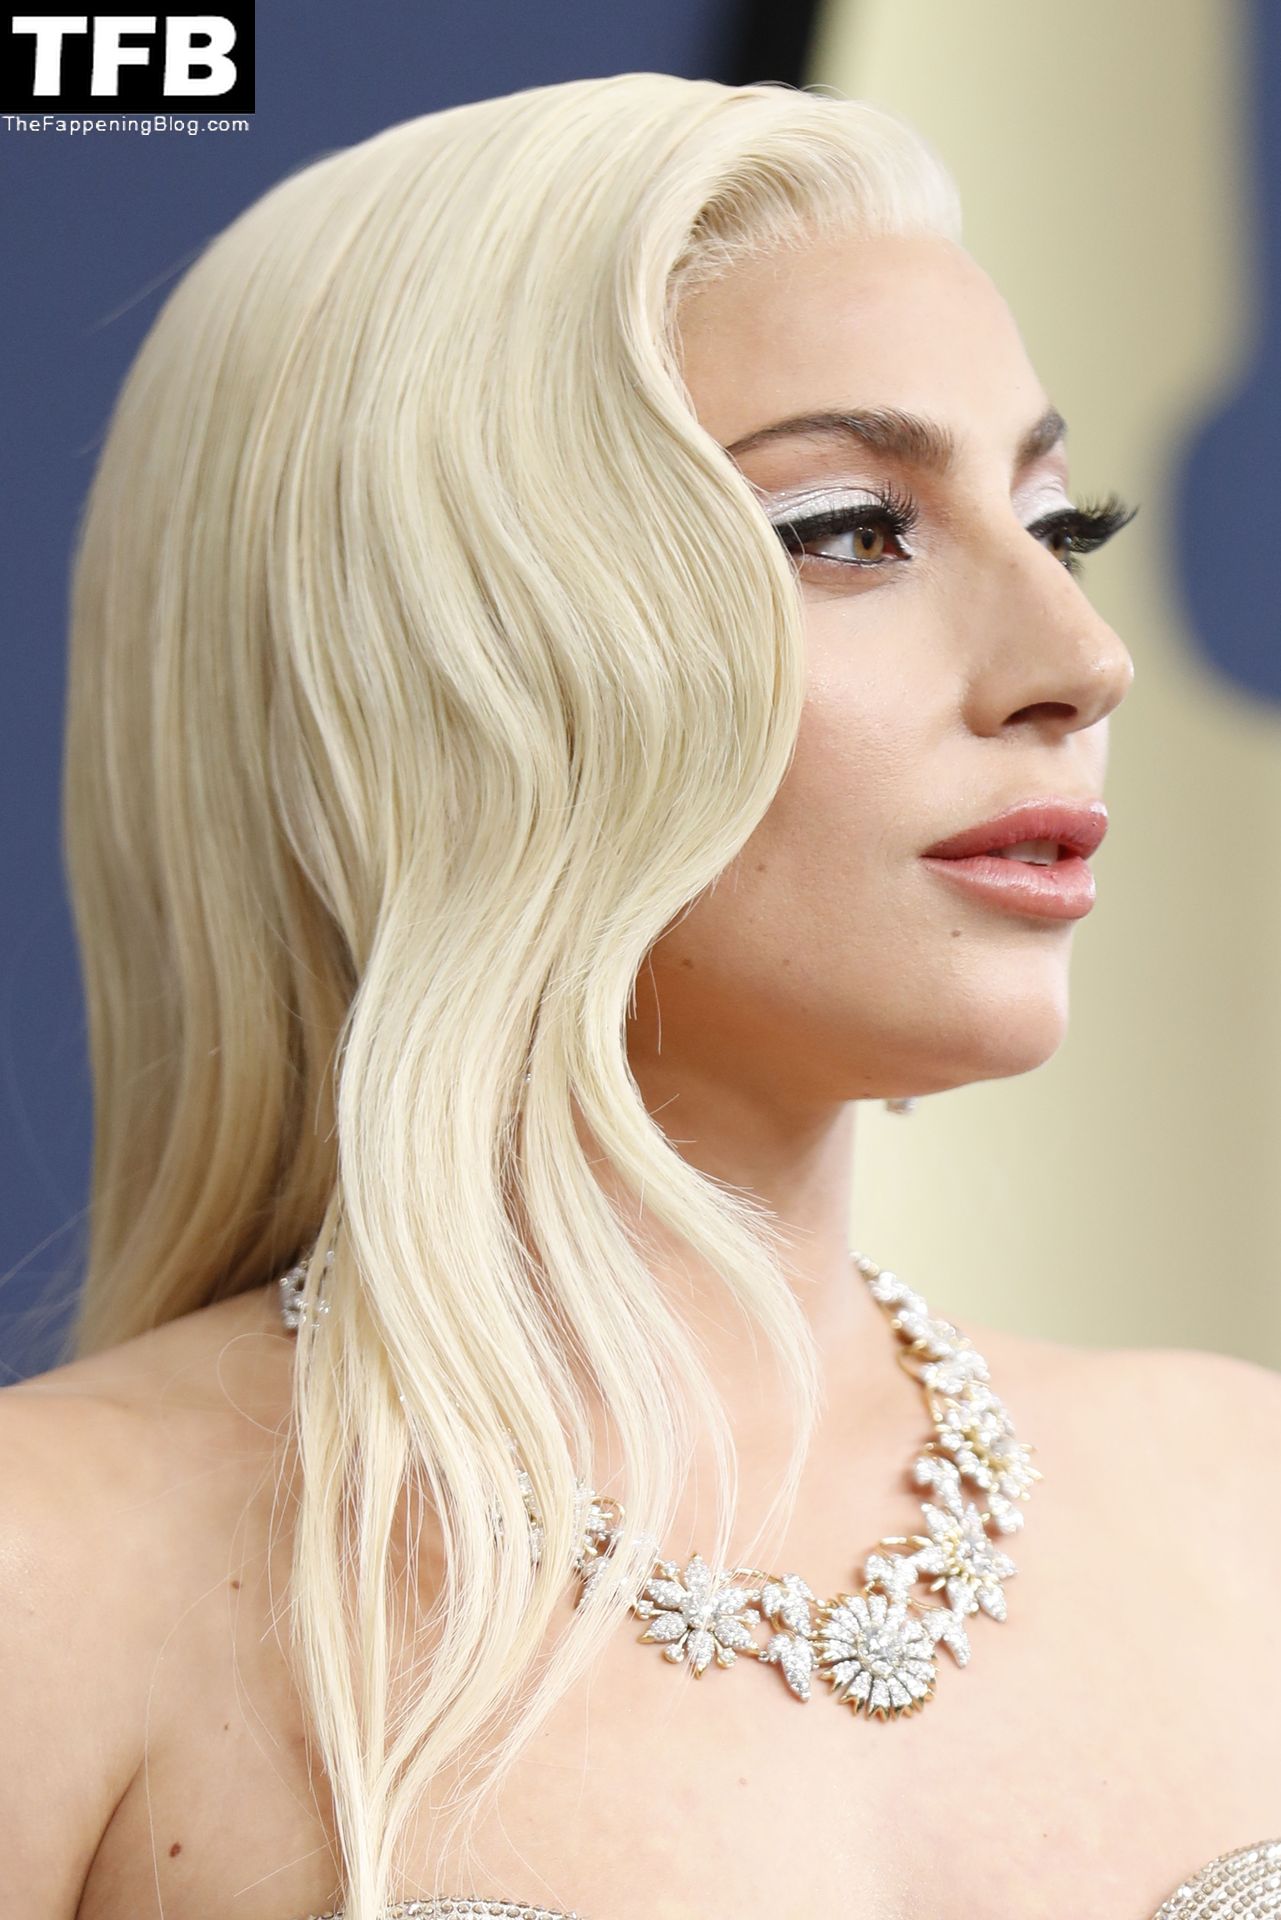 Lady-Gaga-Sexy-The-Fappening-Blog-2.jpg